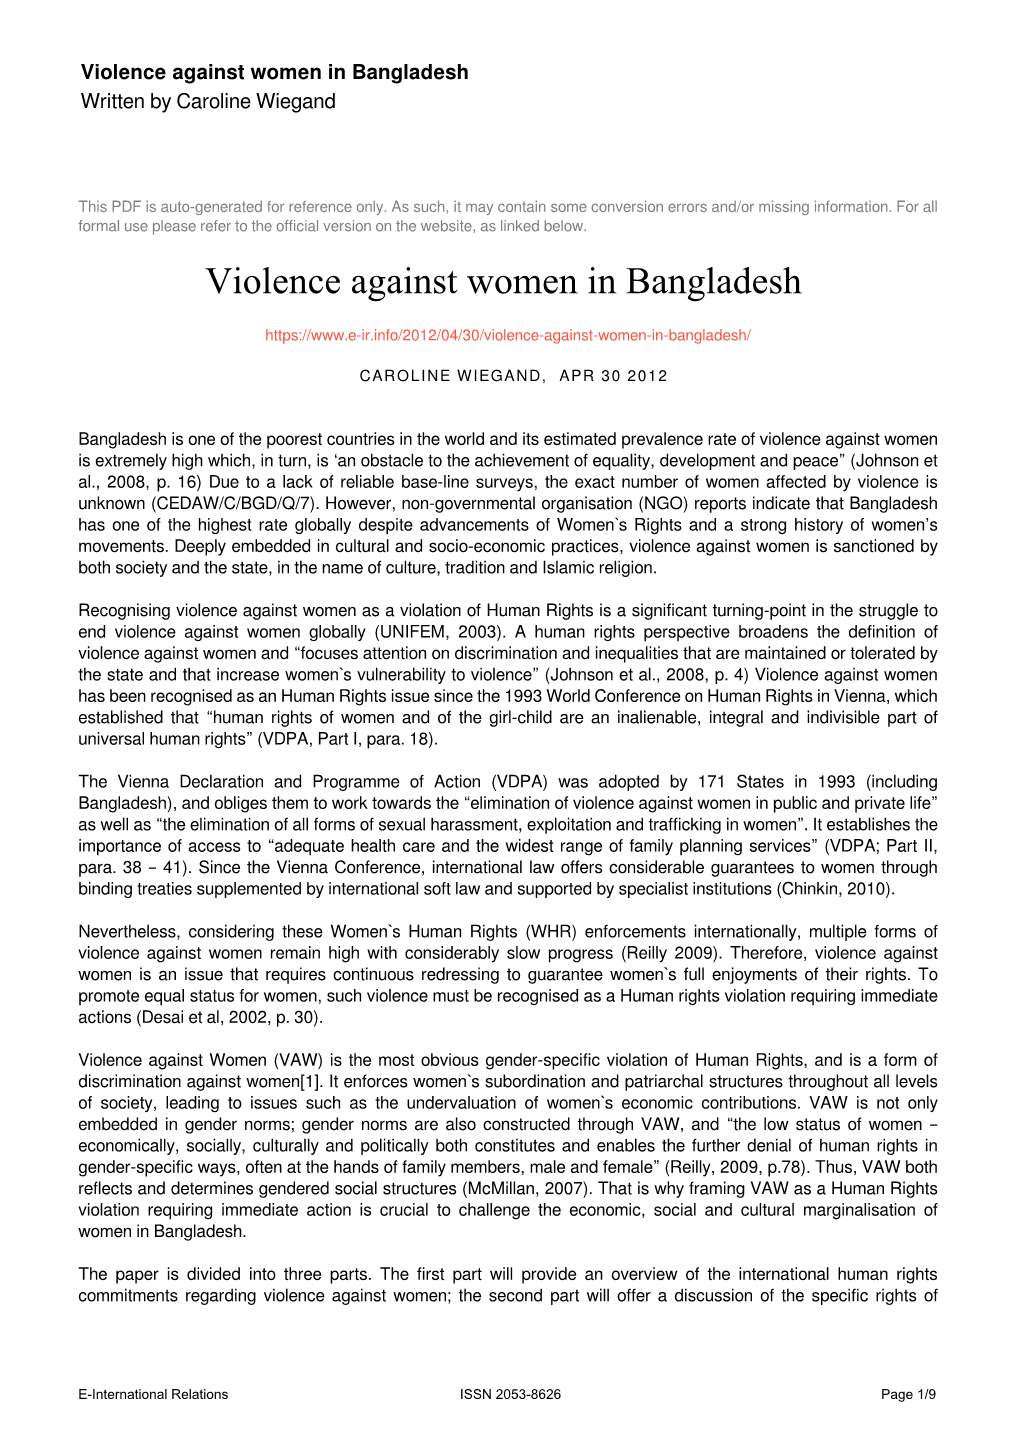 Violence Against Women in Bangladesh Written by Caroline Wiegand